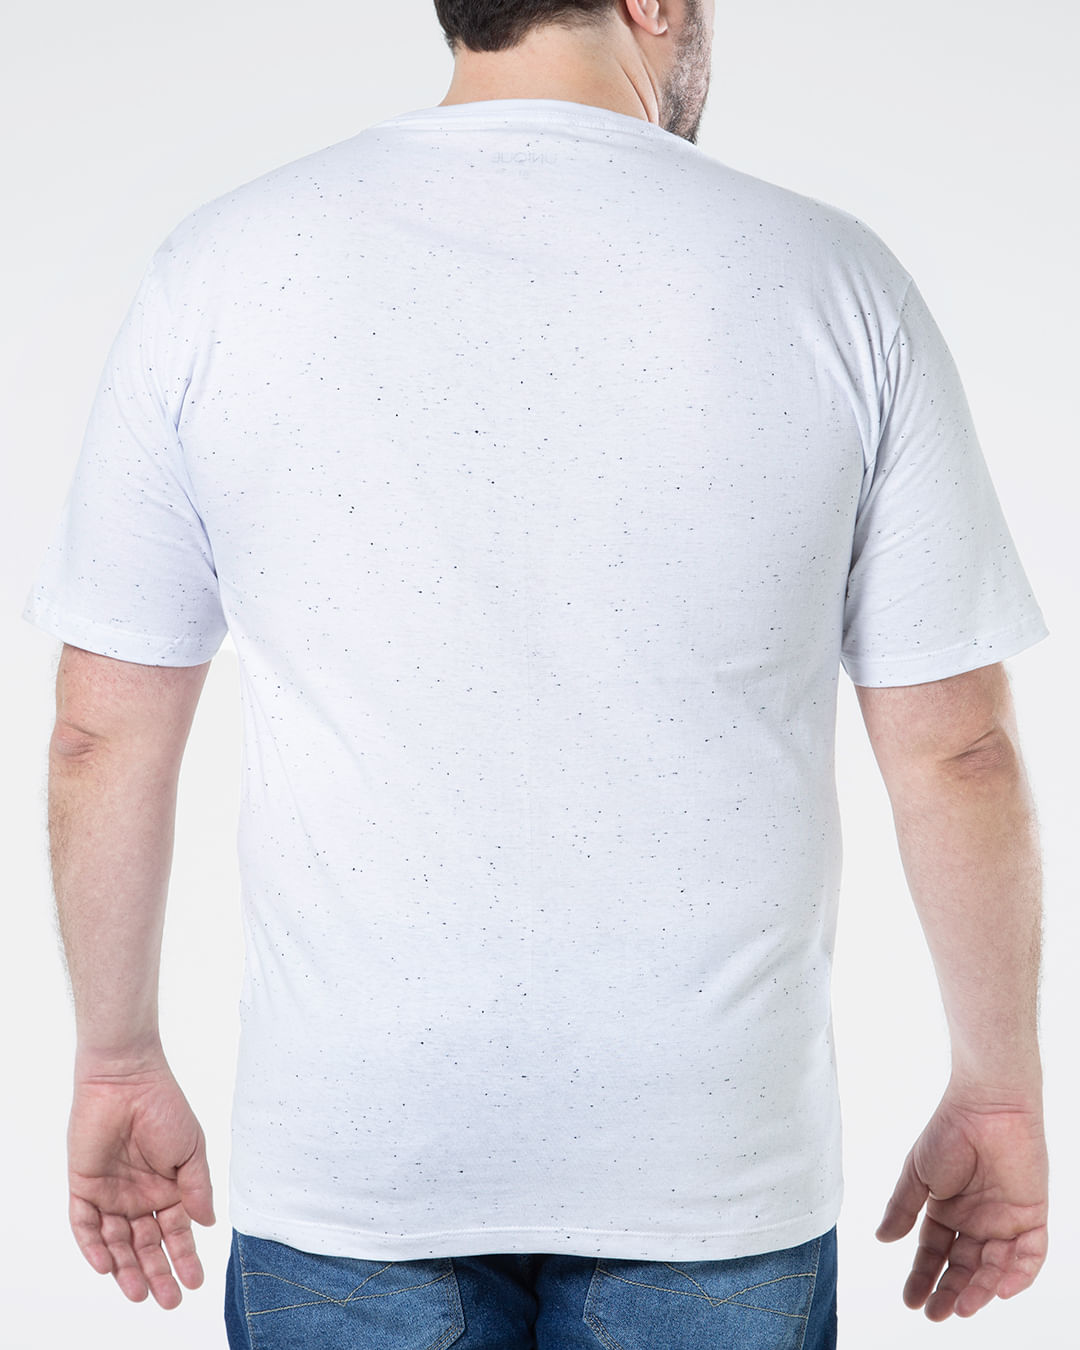 Camiseta-Plus-Size-Botone-Branco